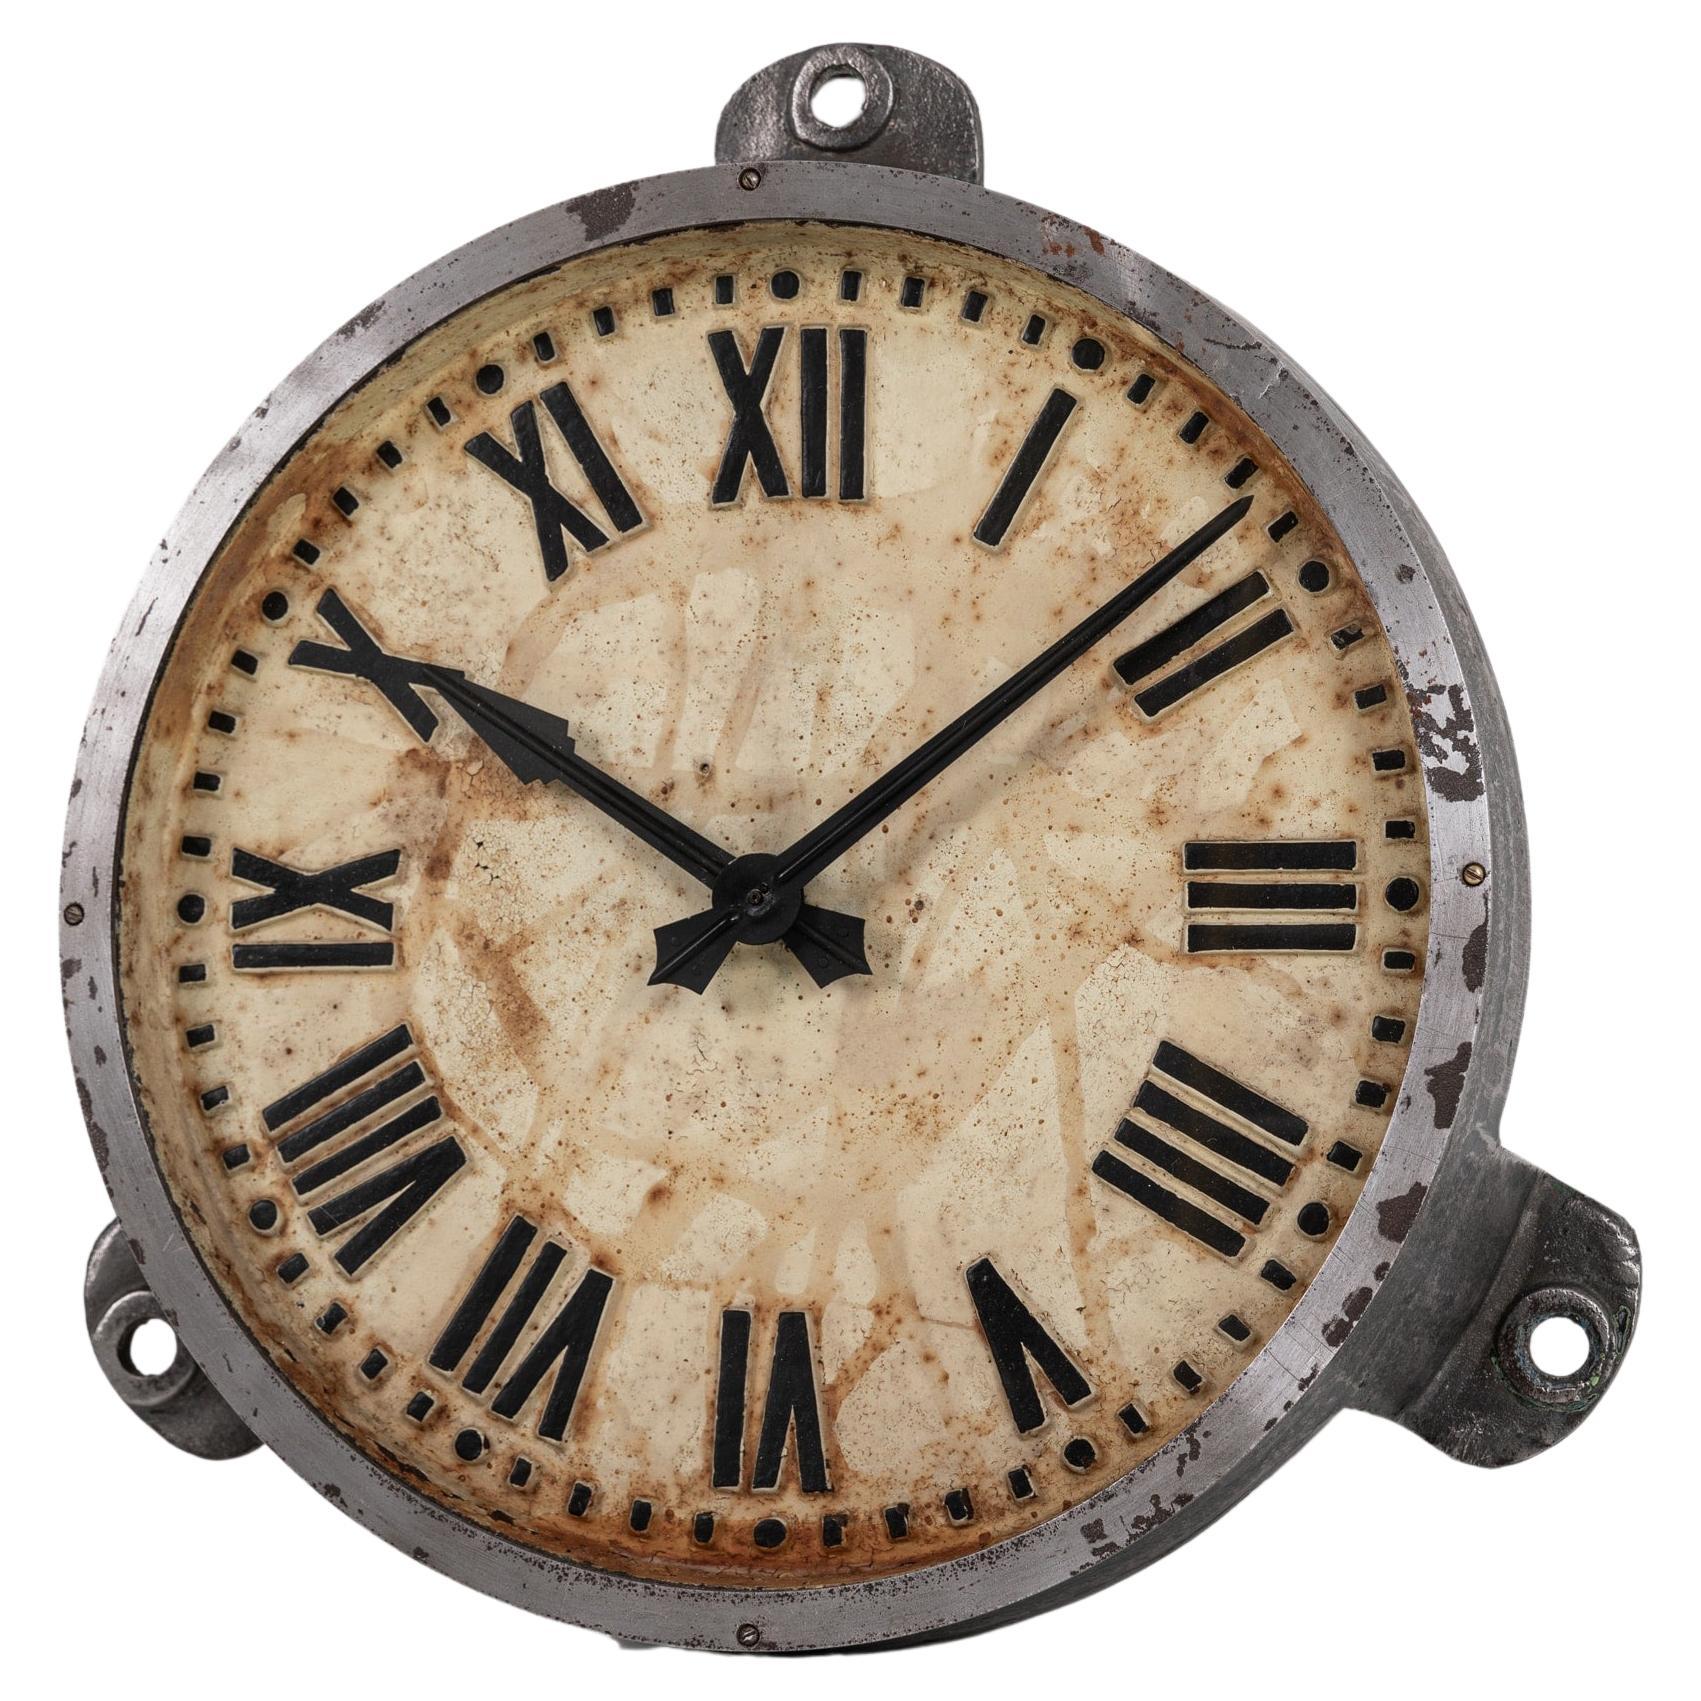 How do I identify my antique clock?